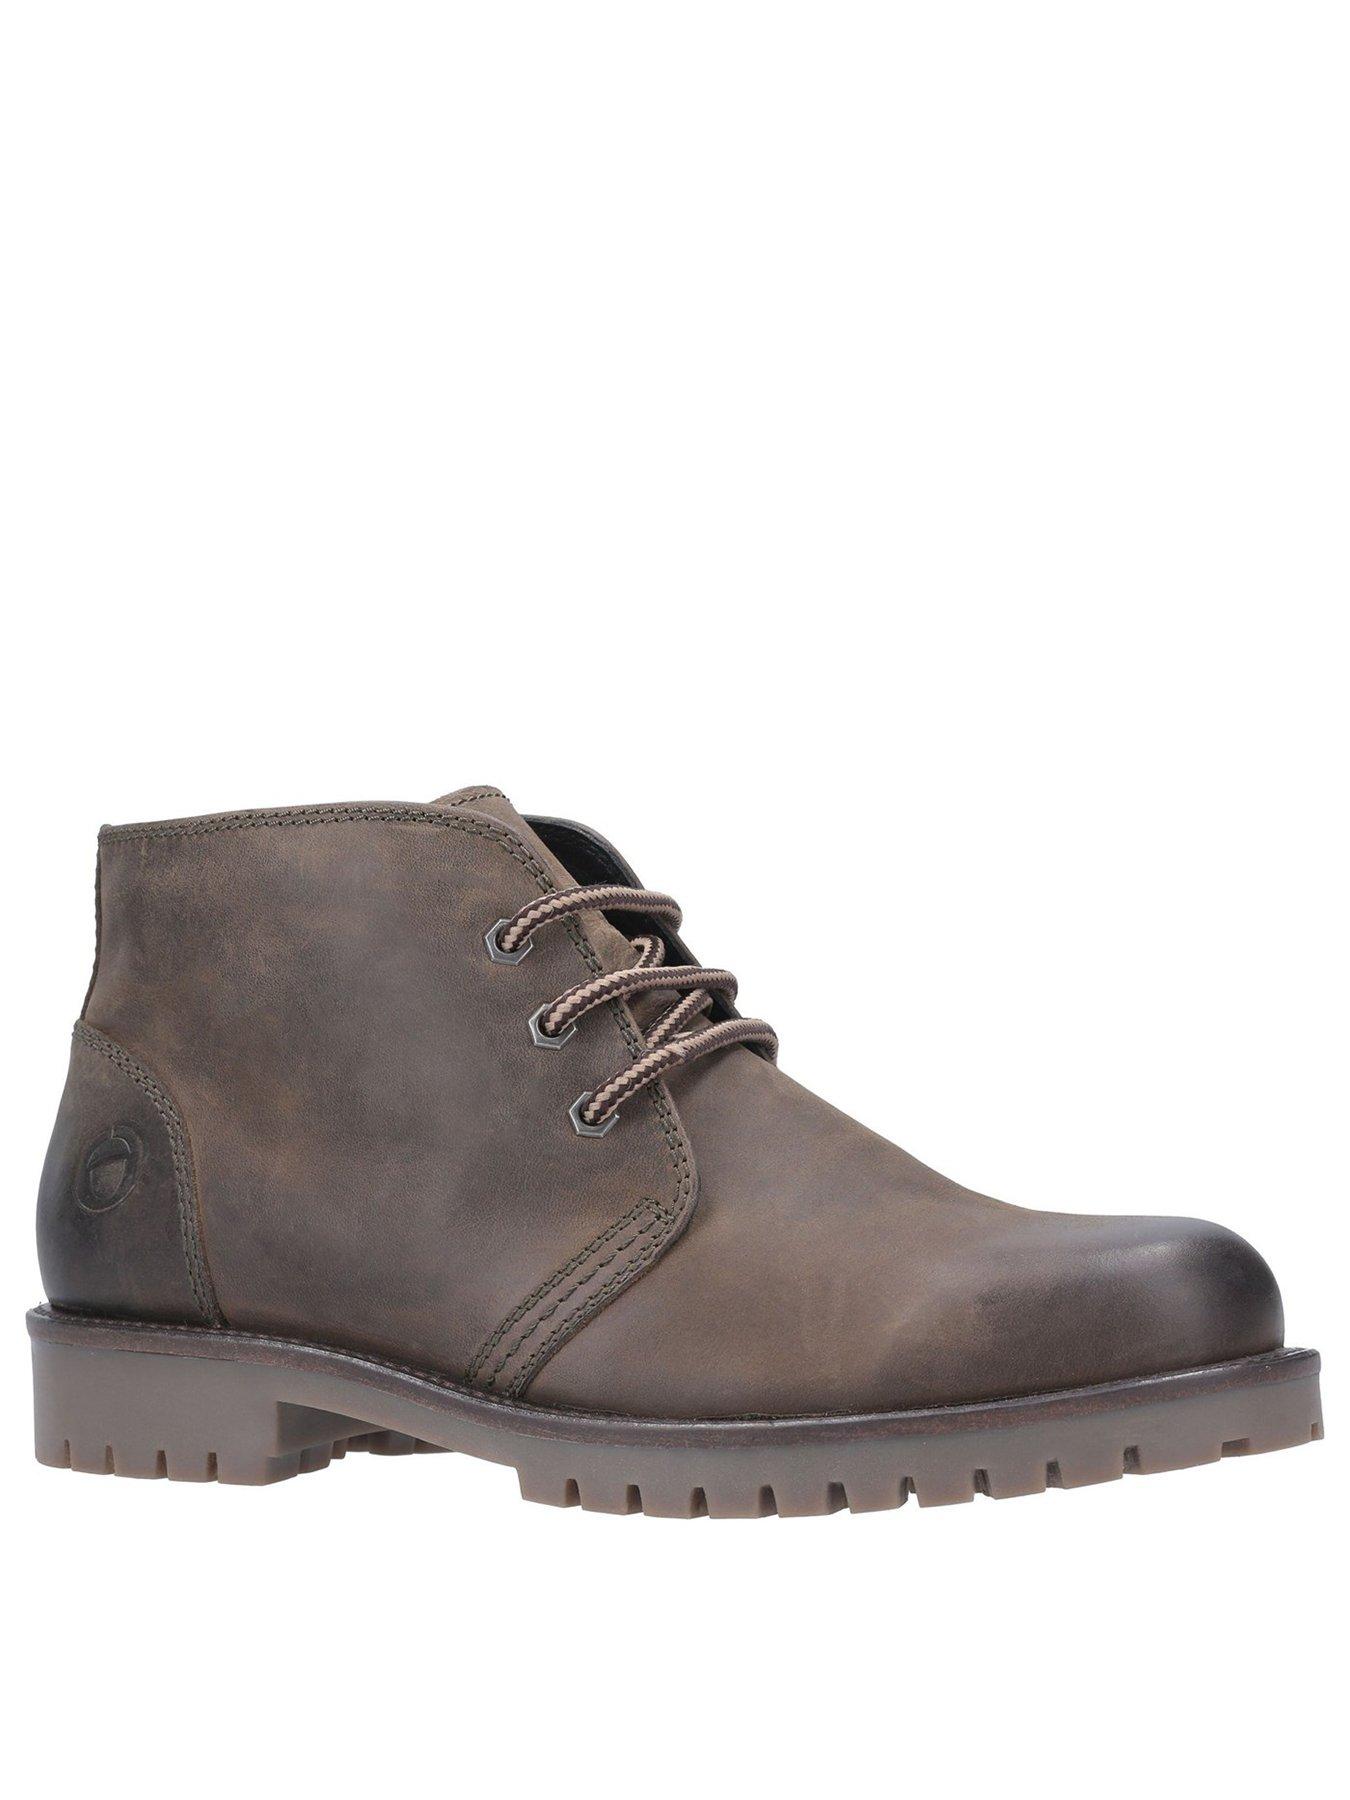  Stroud Leather Boots - Khaki